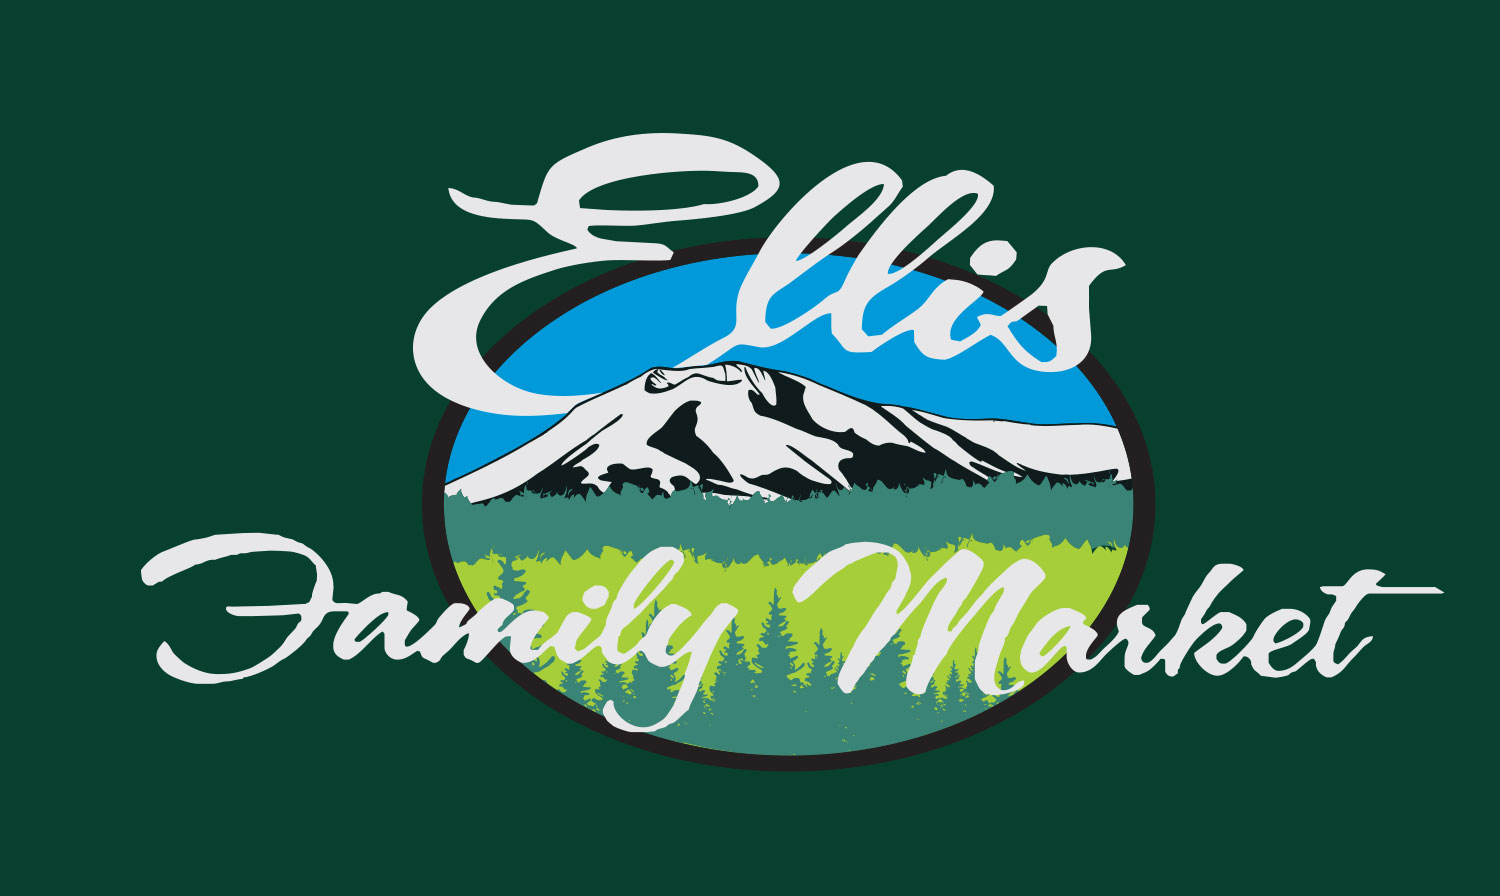 Ellis Family Market logo